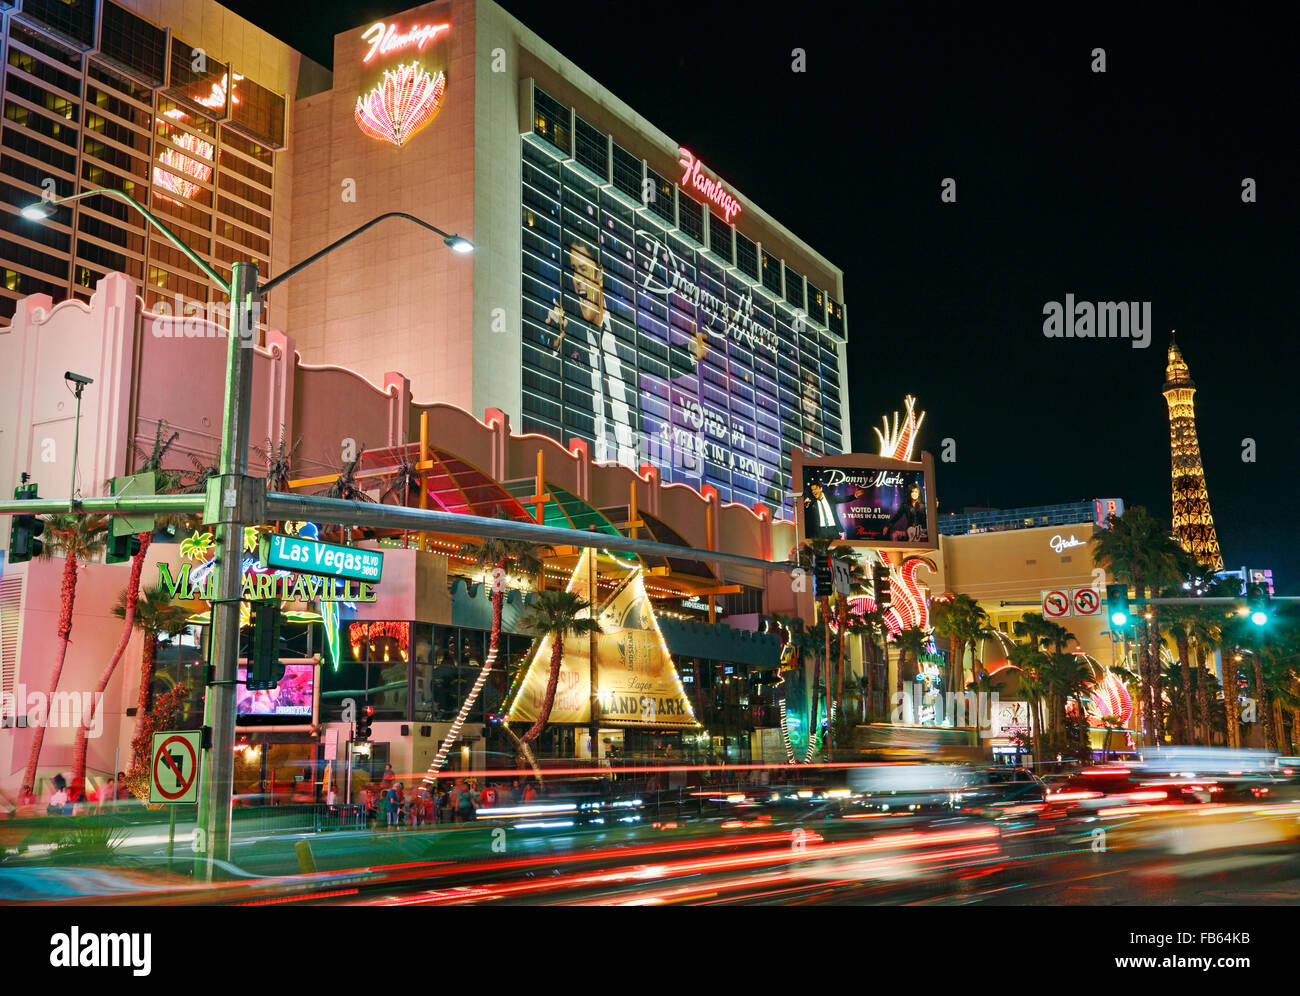 Flamingo hotel and casino on Las Vegas strip Boulevard, at night Stock Photo